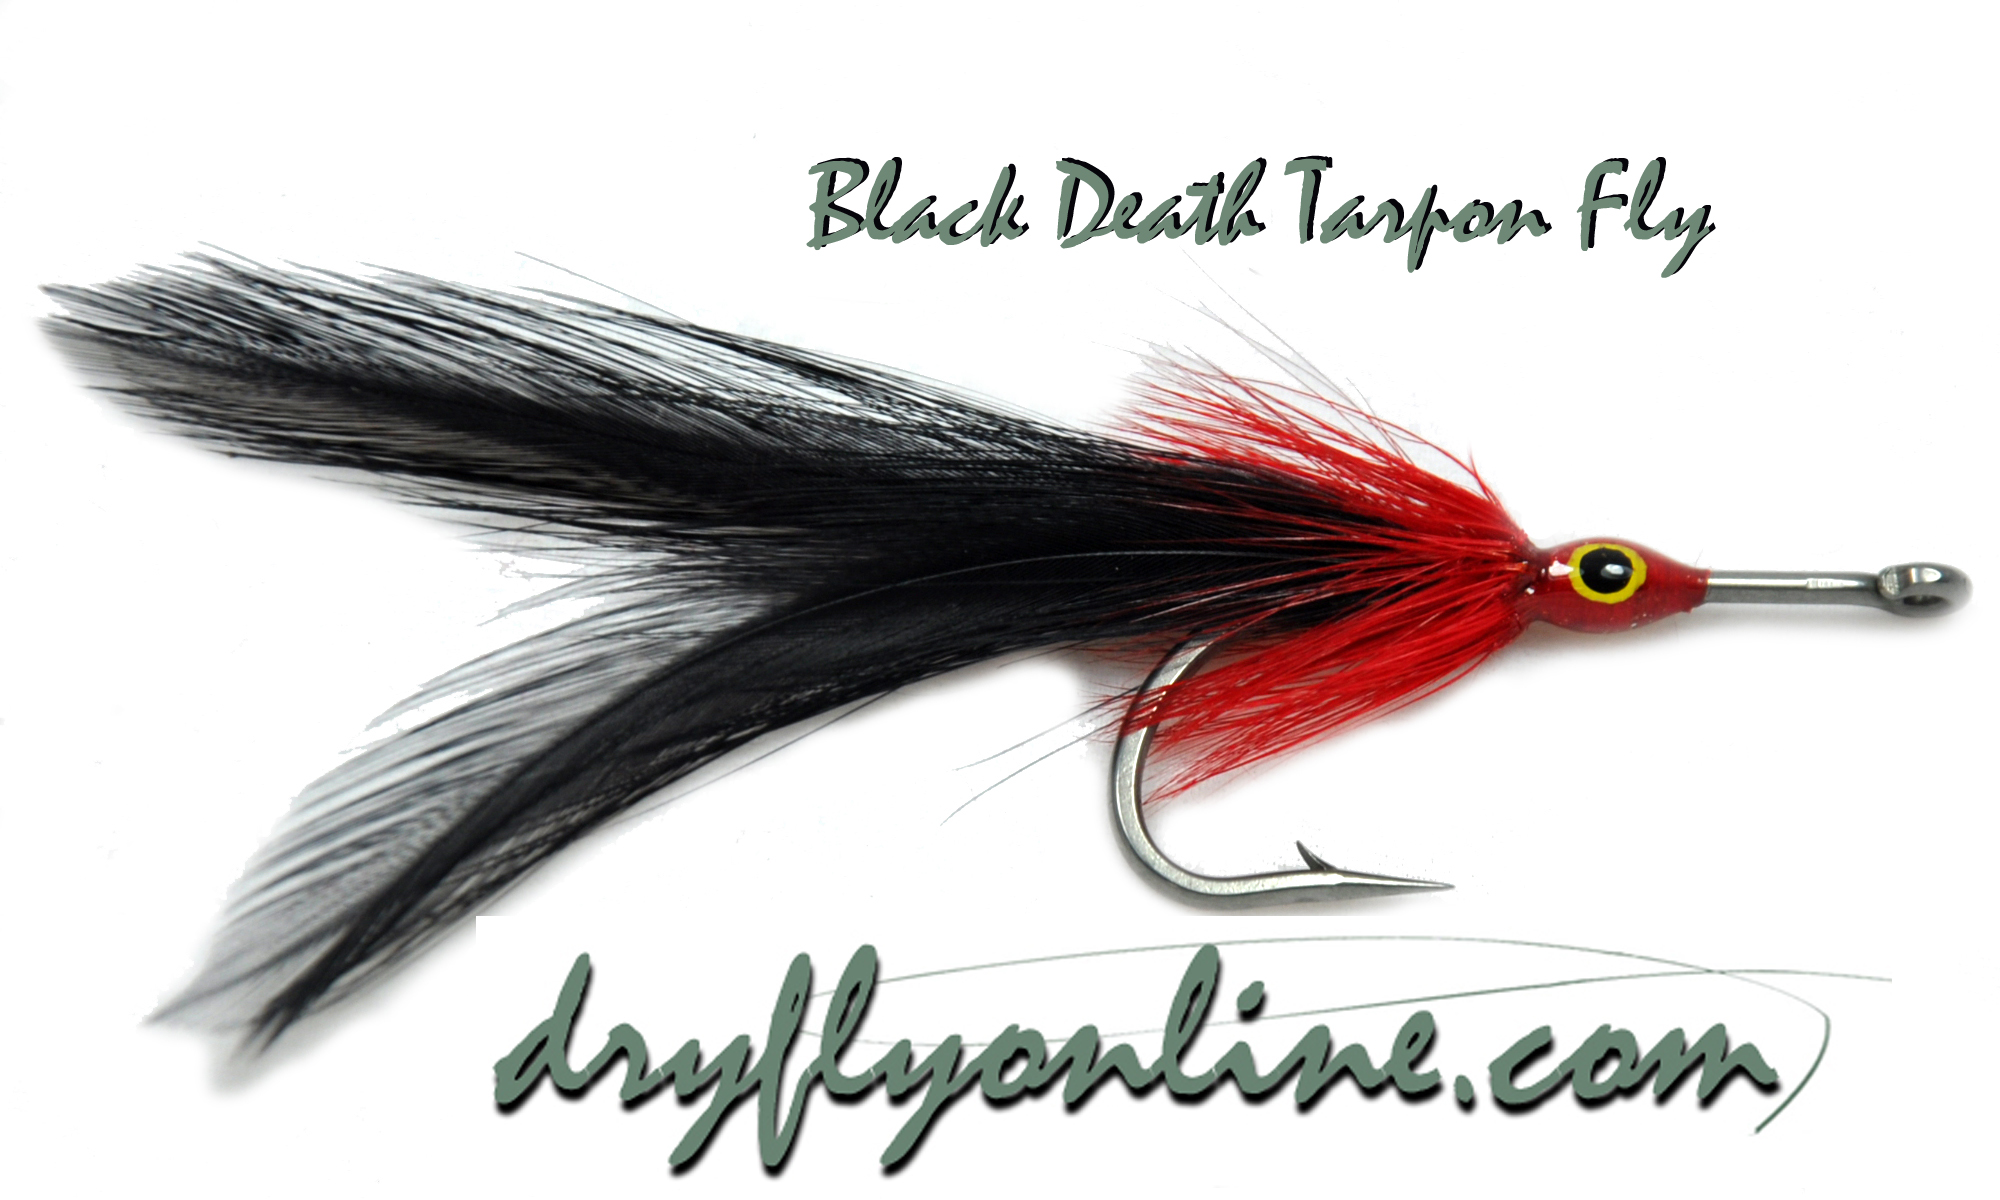 Black Death Tarpon Fly from DryFlyOnline.com